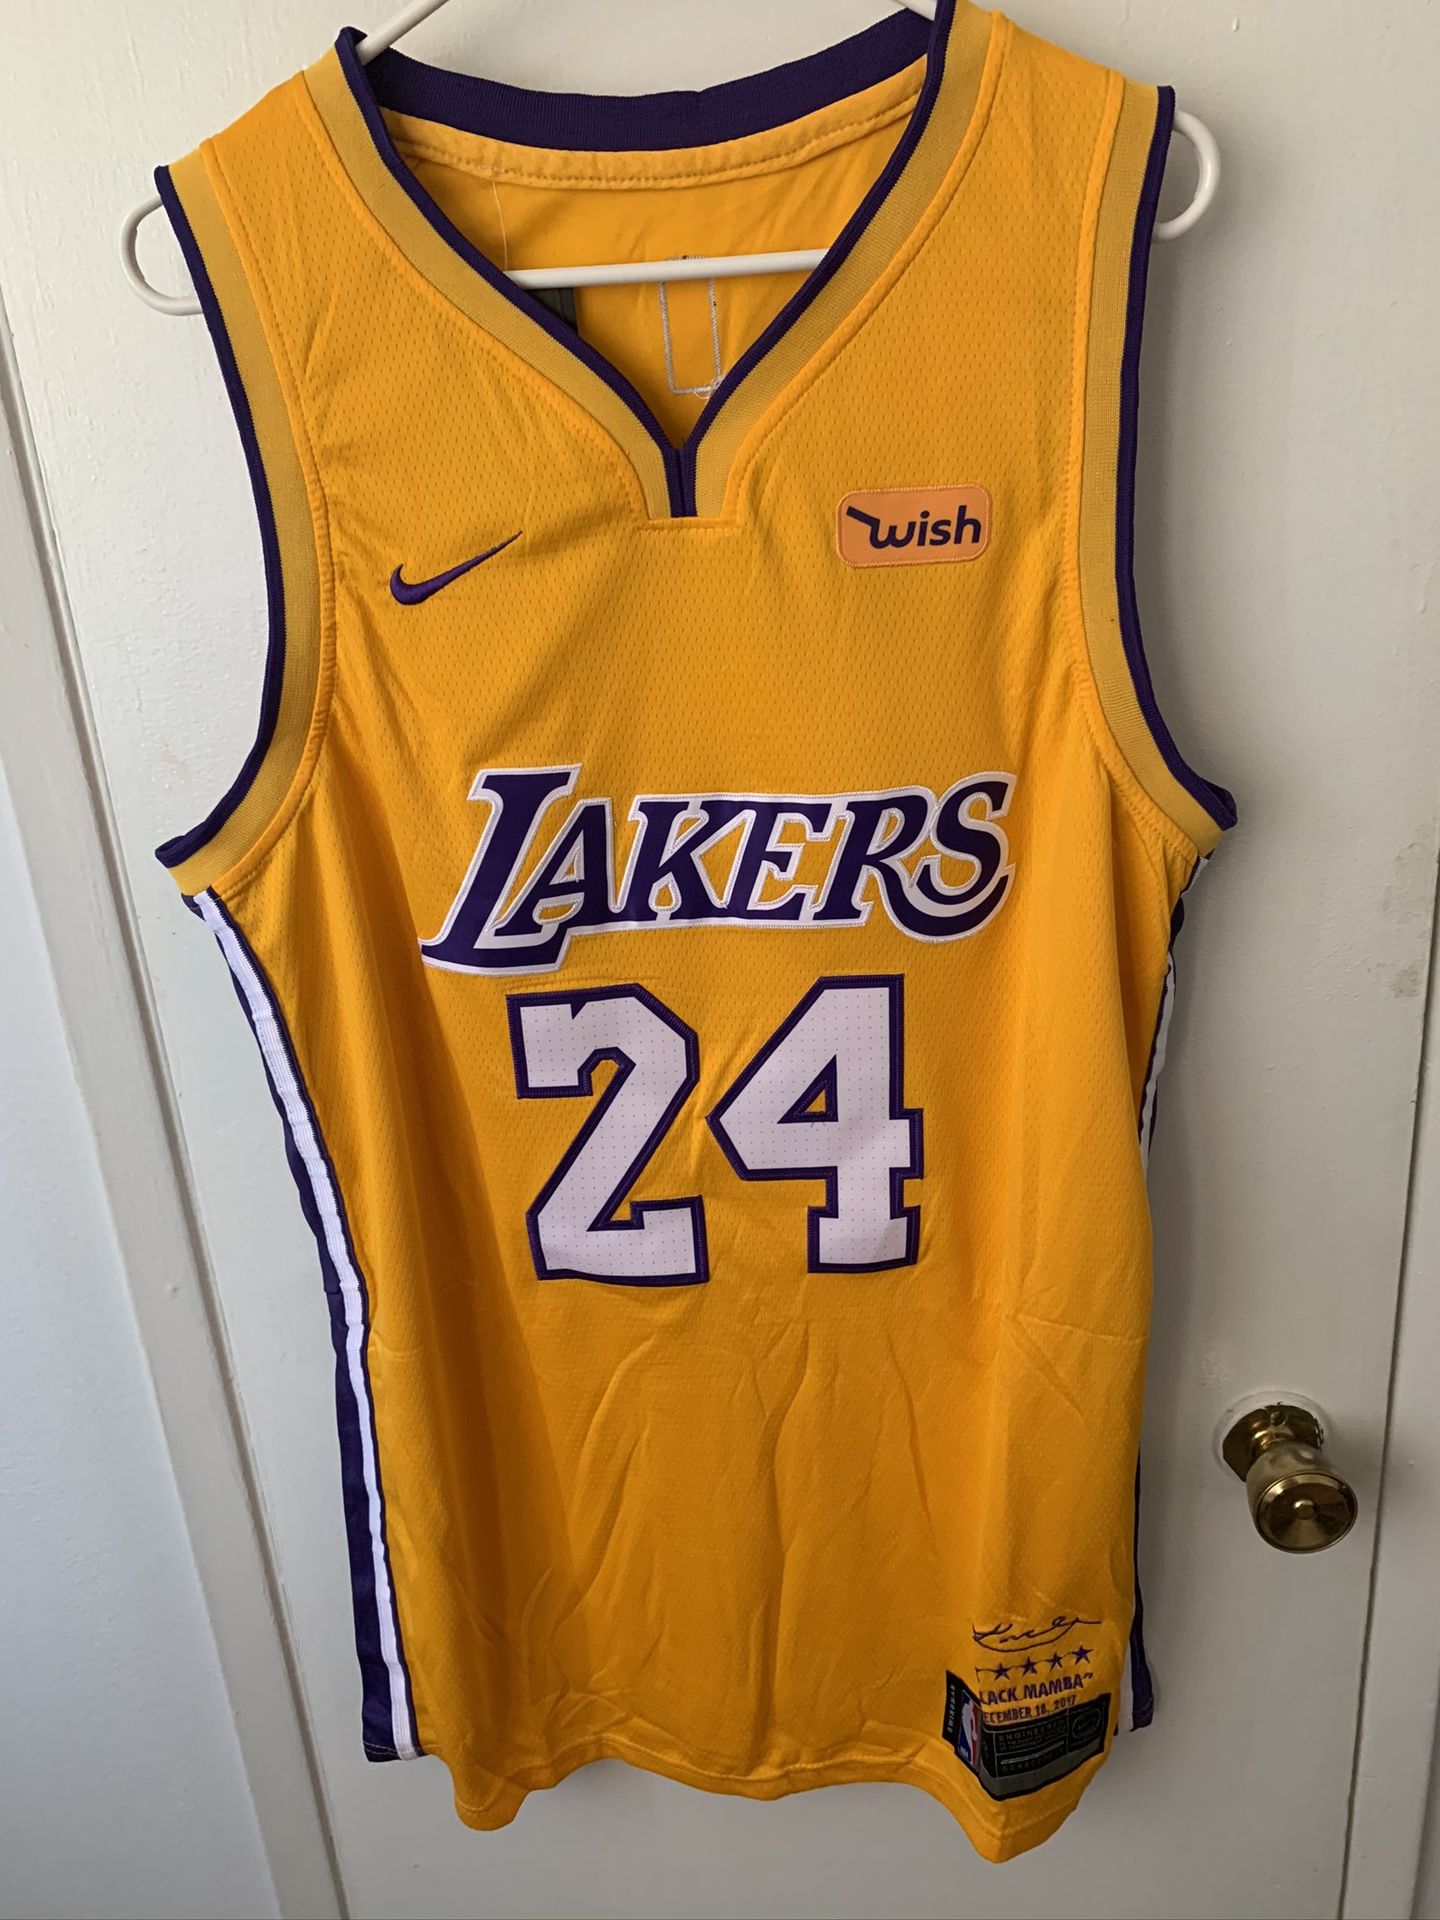 Kobe Bryant #24 yellow Los Angeles Lakers retirement jersey